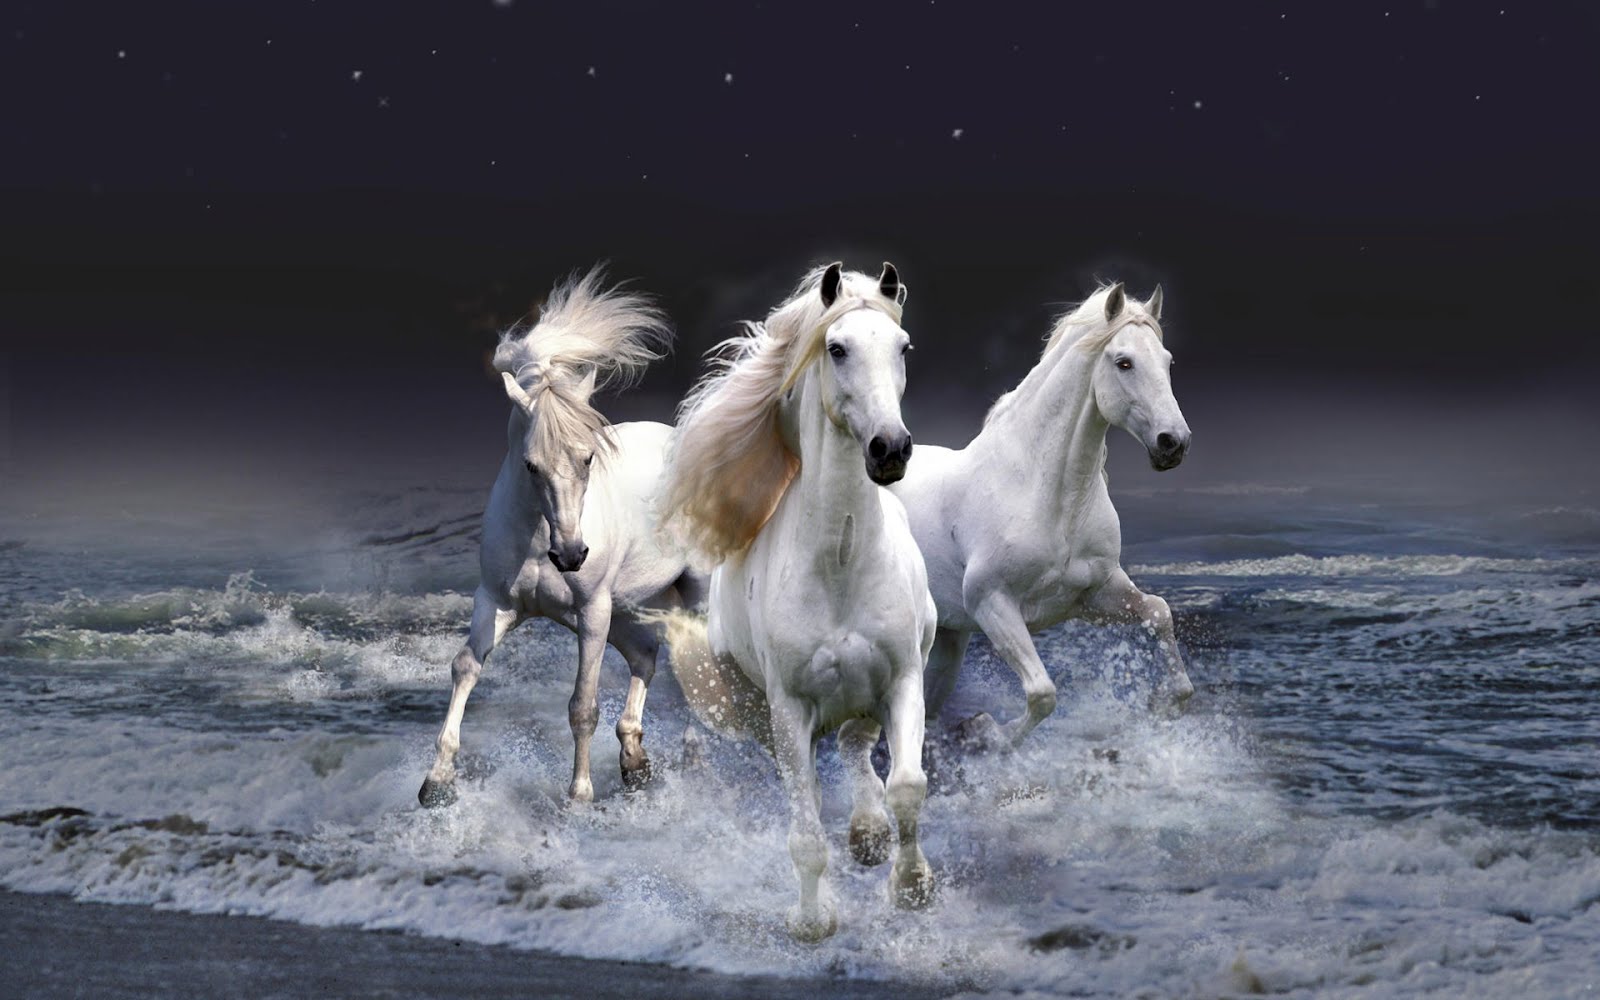 caballos-blancos-saliendo-del-mar-gara%25C3%25B1ones-horses-in-the-sea-1920x1200.jpg